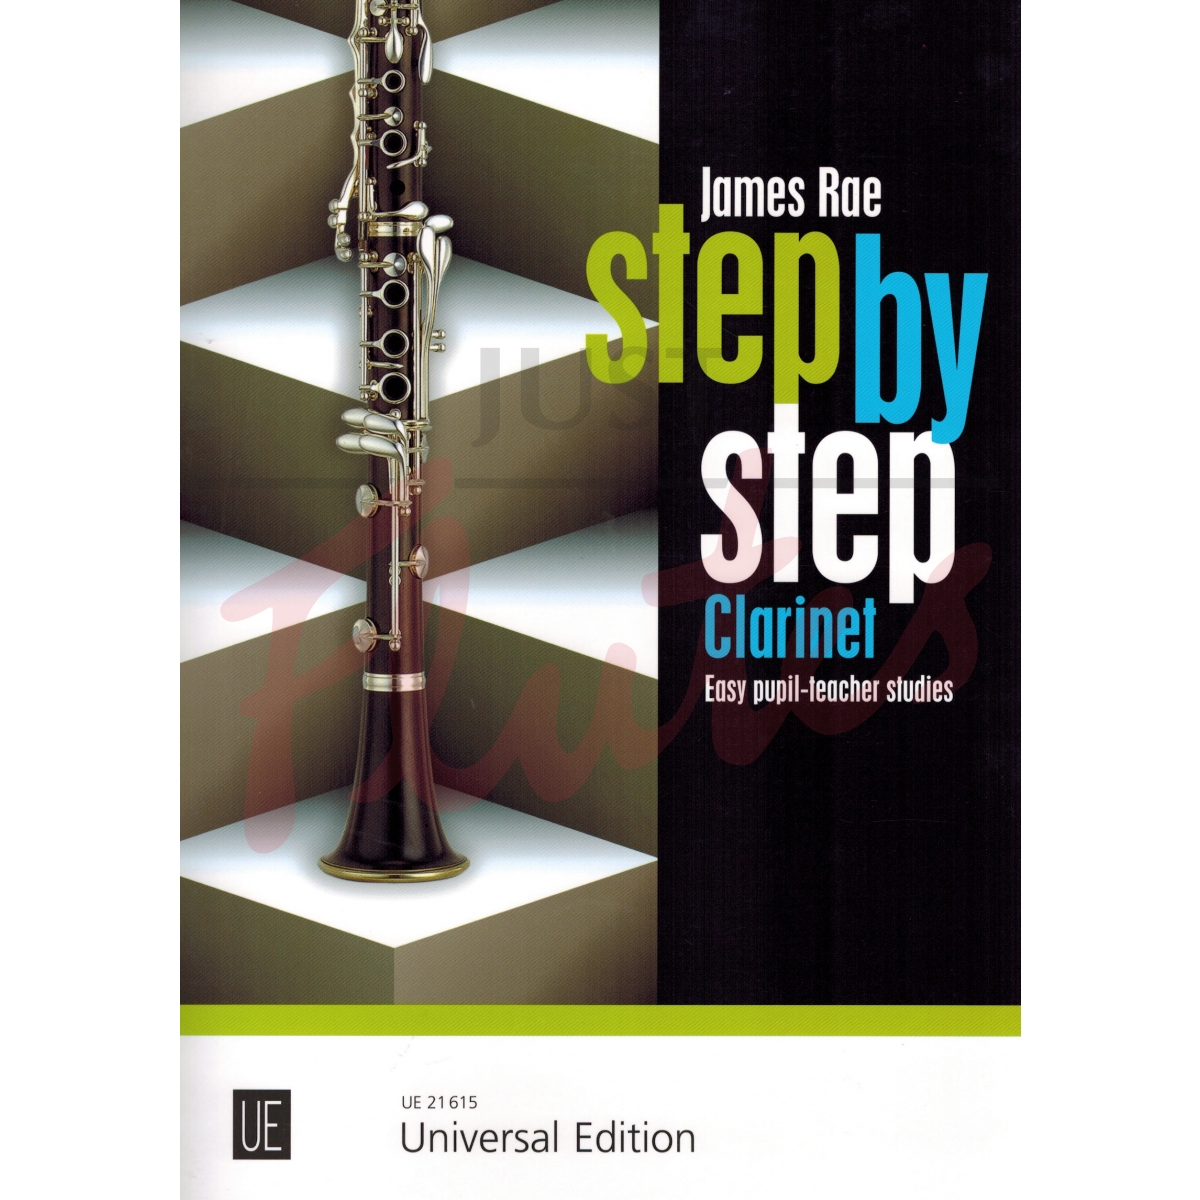 Step by Step - Clarinet Pupil-teacher studies